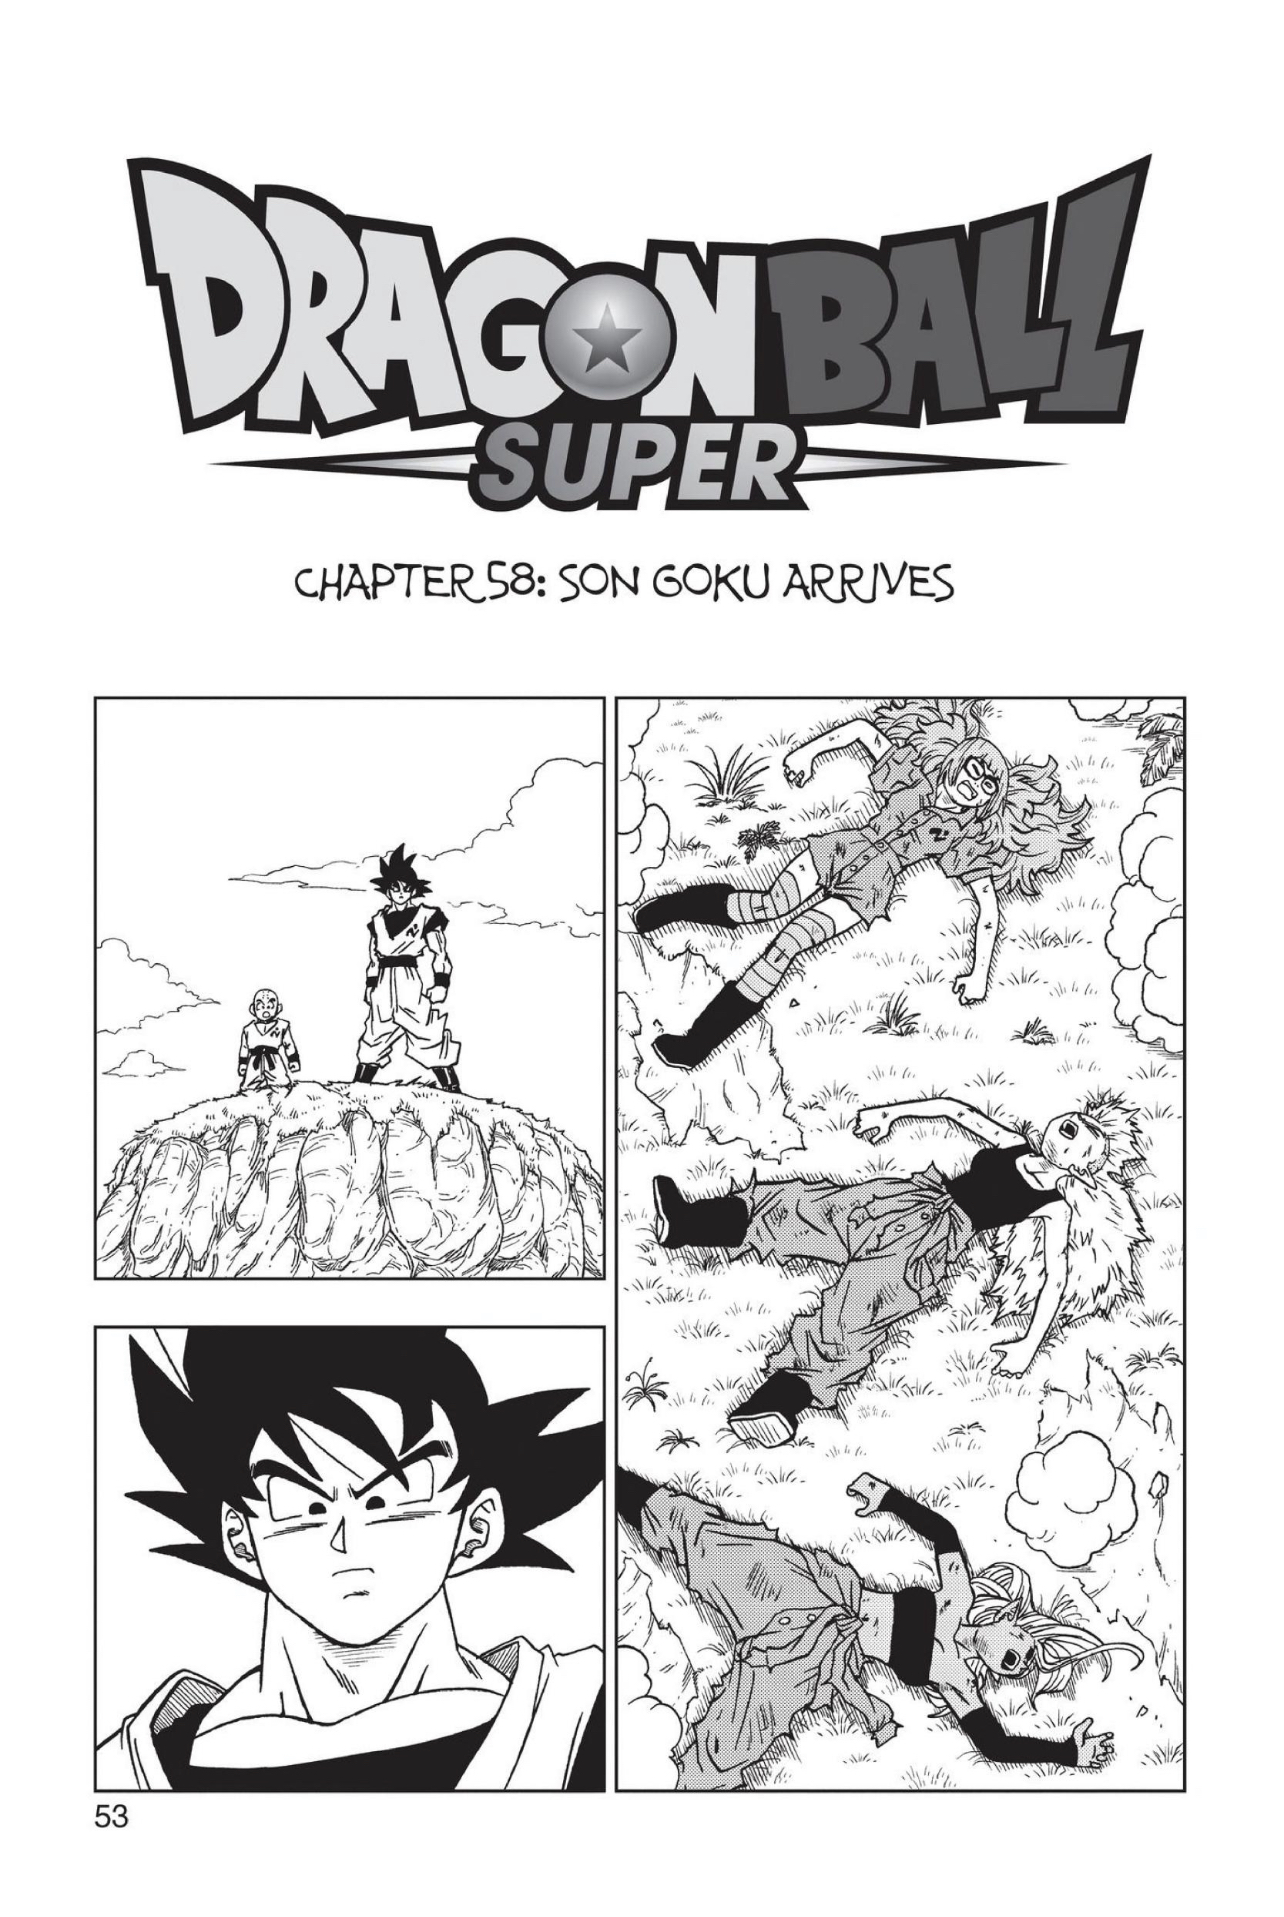 Dragon Ball Super Manga CH.58 is Out - Will Goku win Moro?